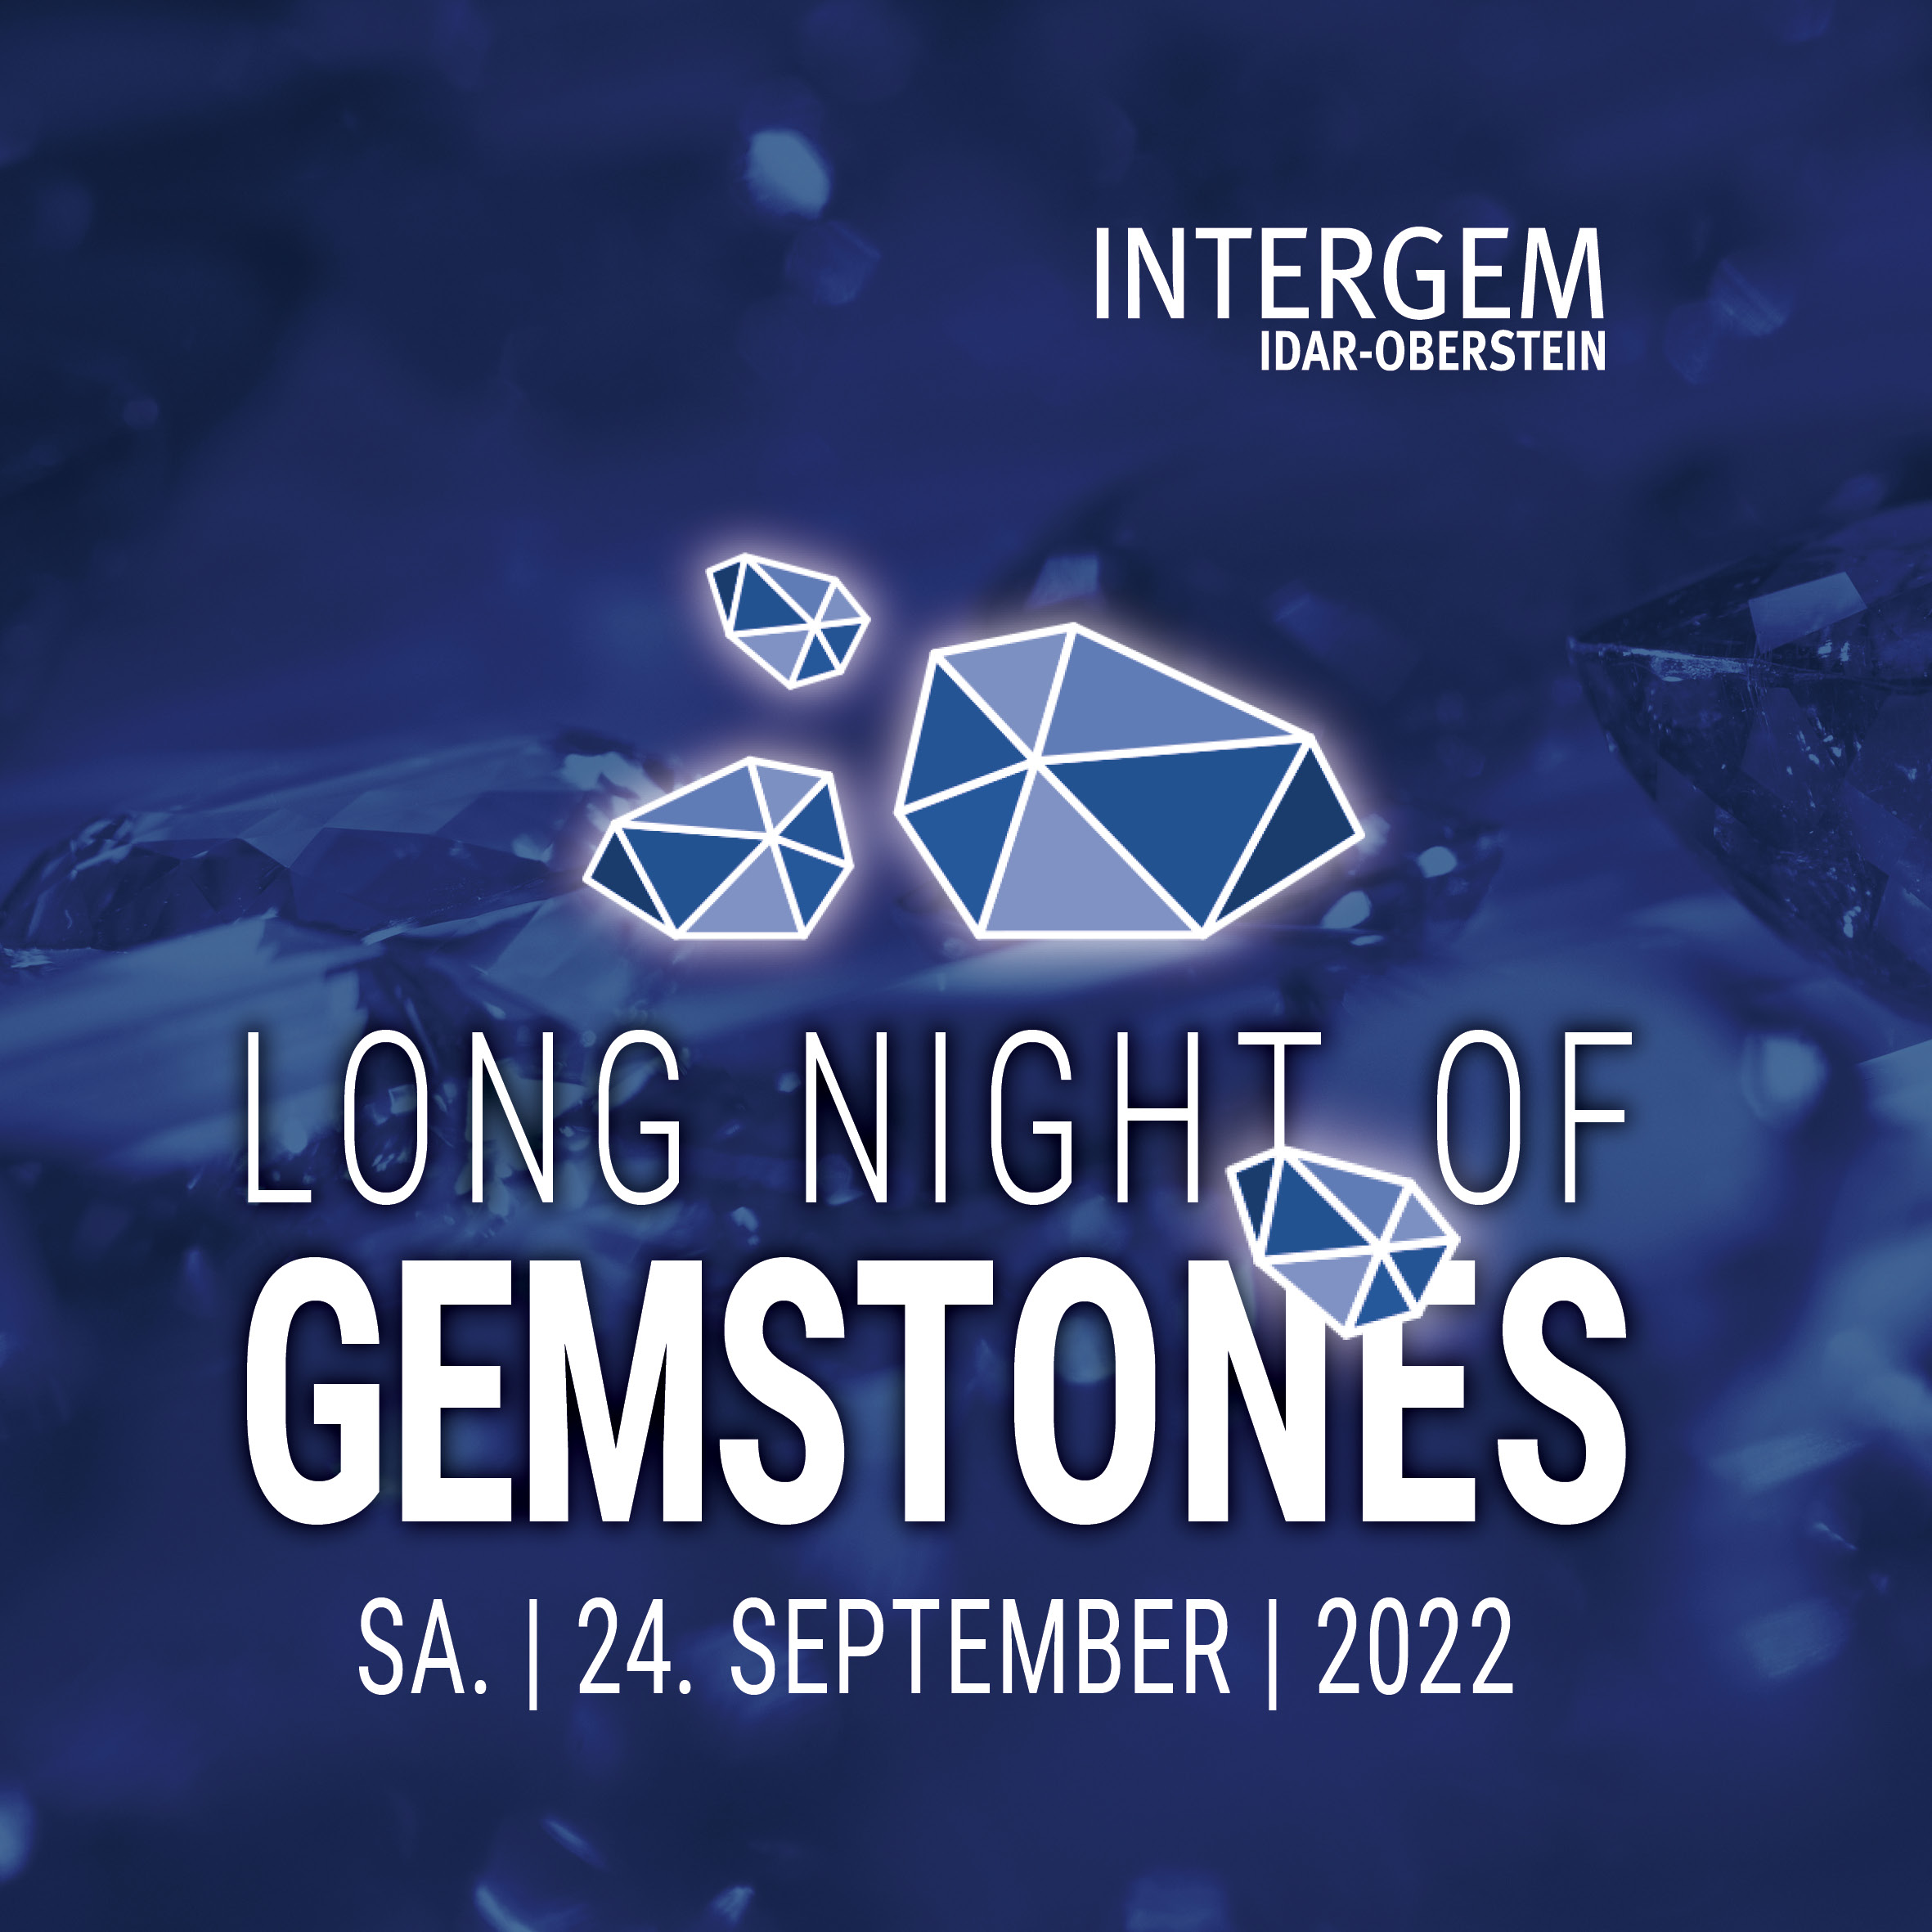 Long night of gemstones